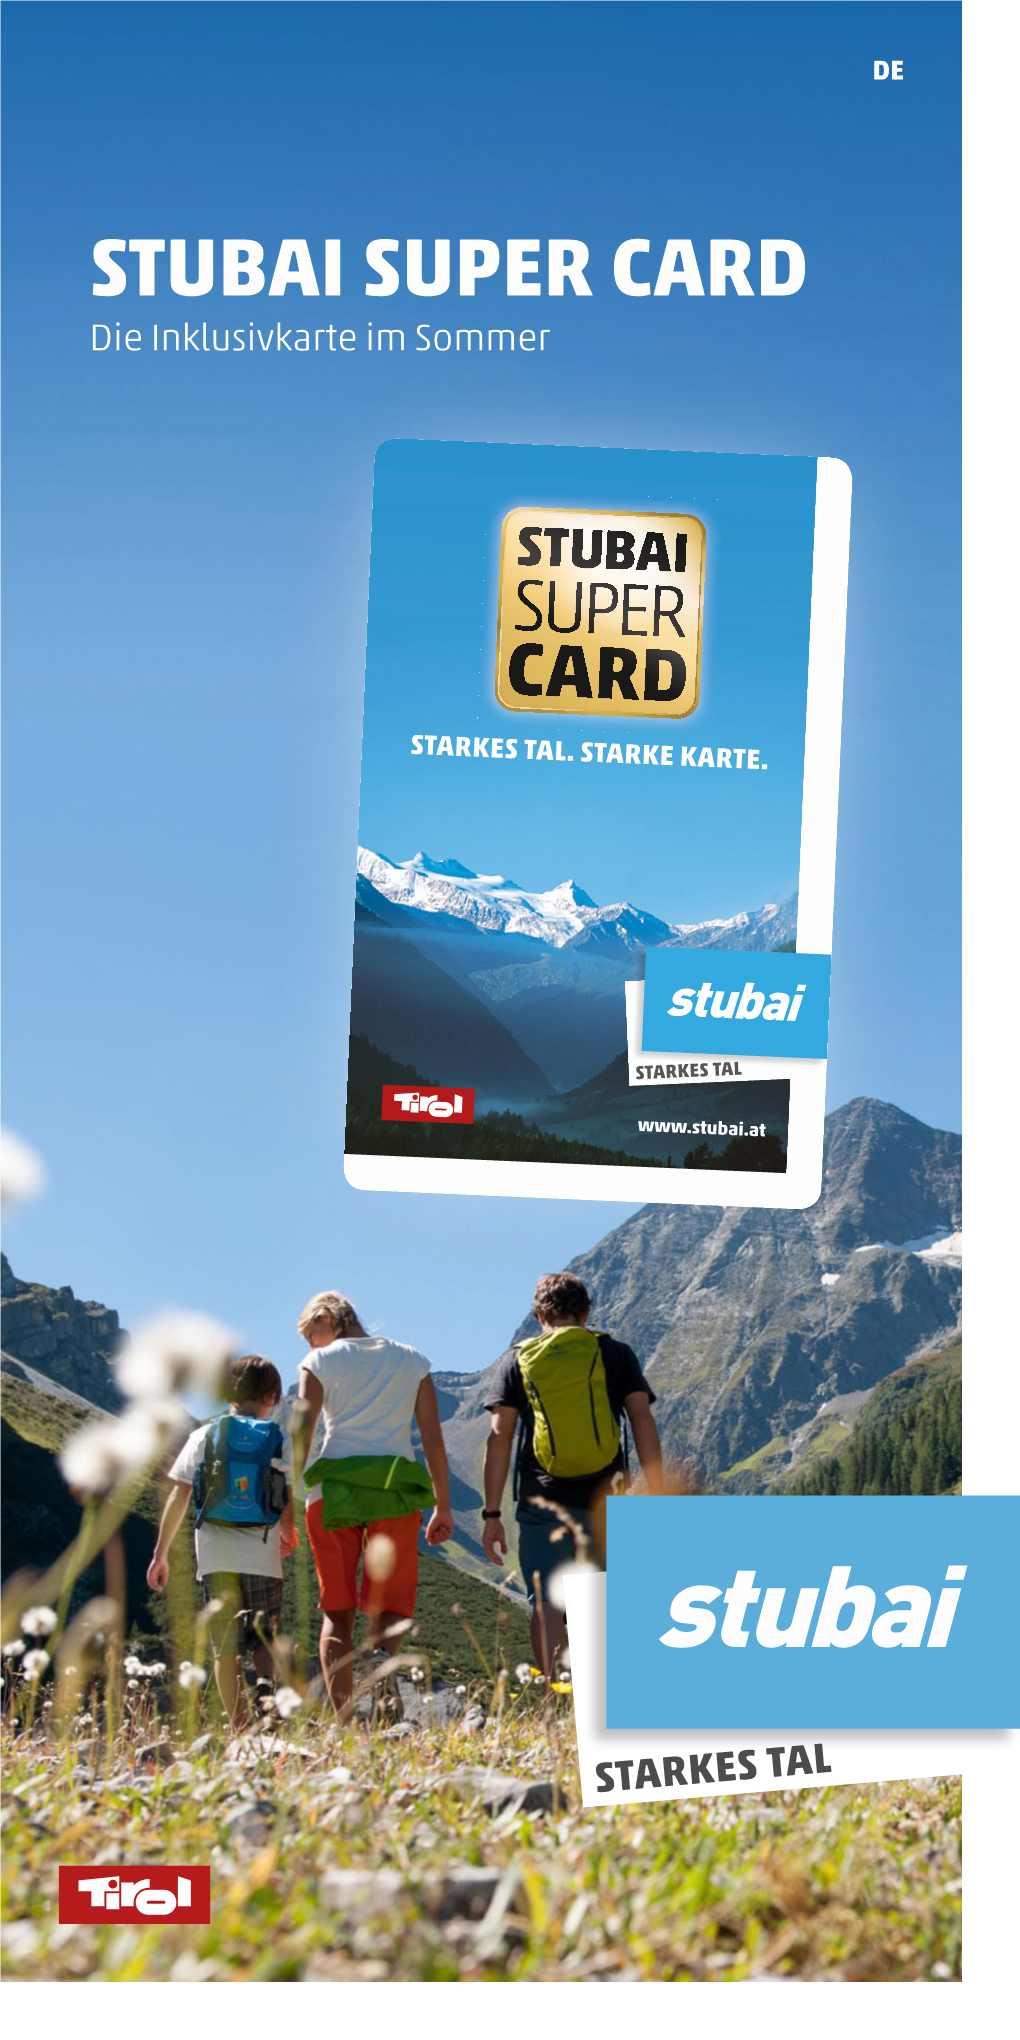 Stubai Super Card Die Inklusivkarte Im Sommer